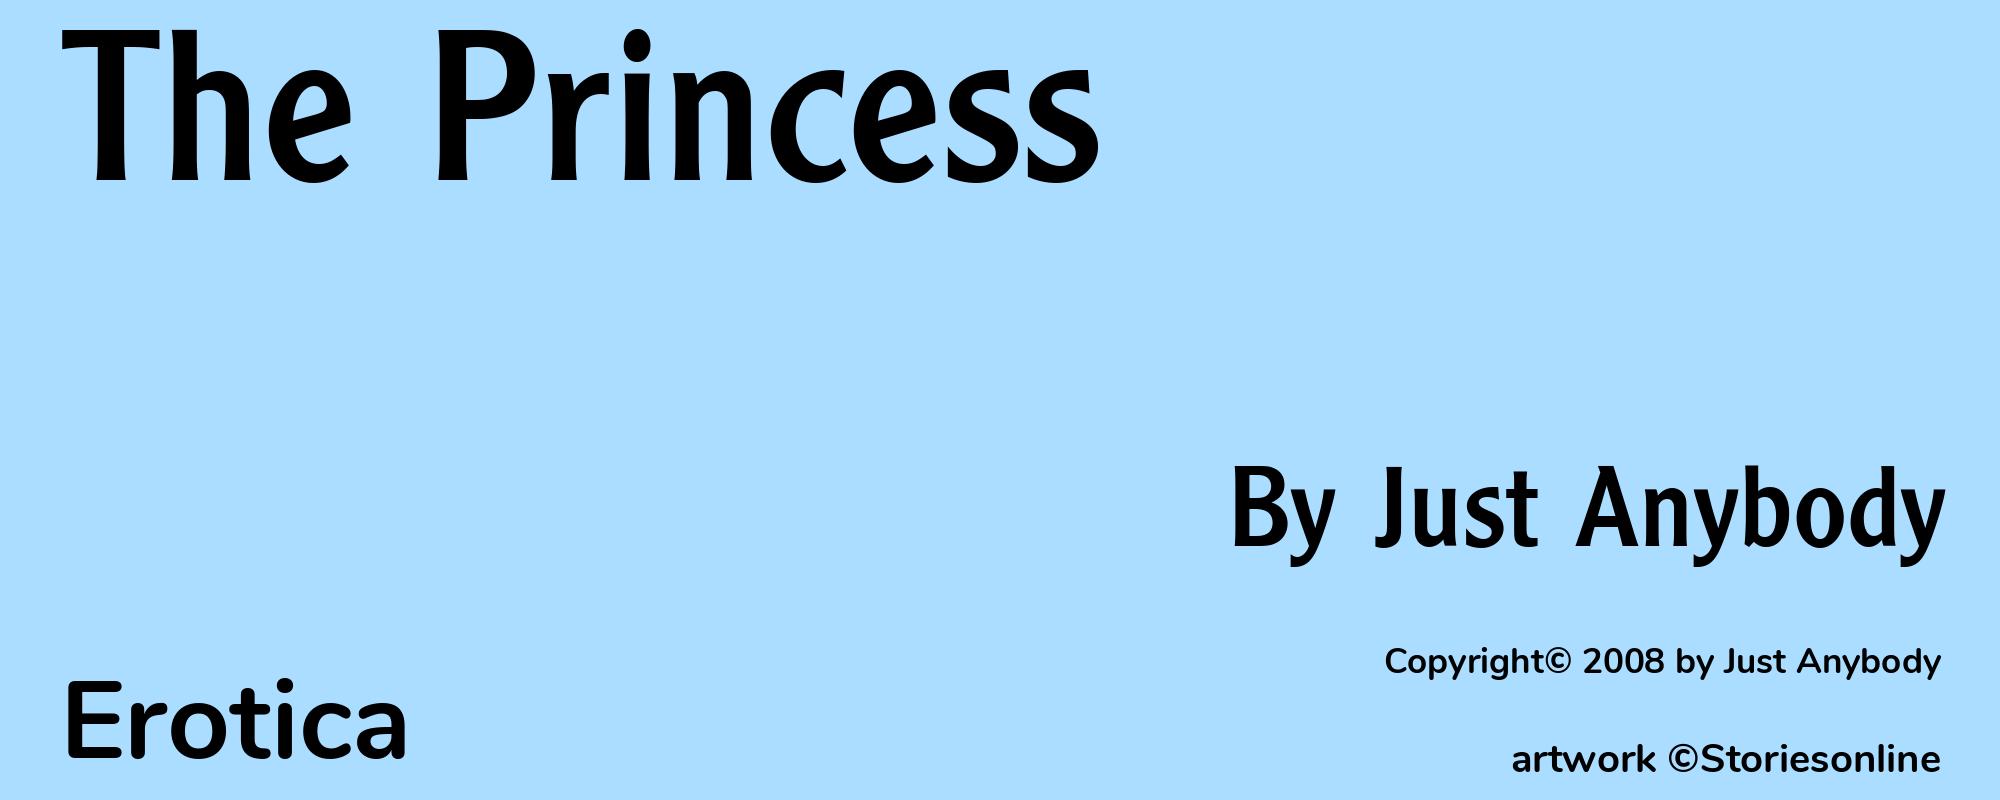 The Princess - Cover